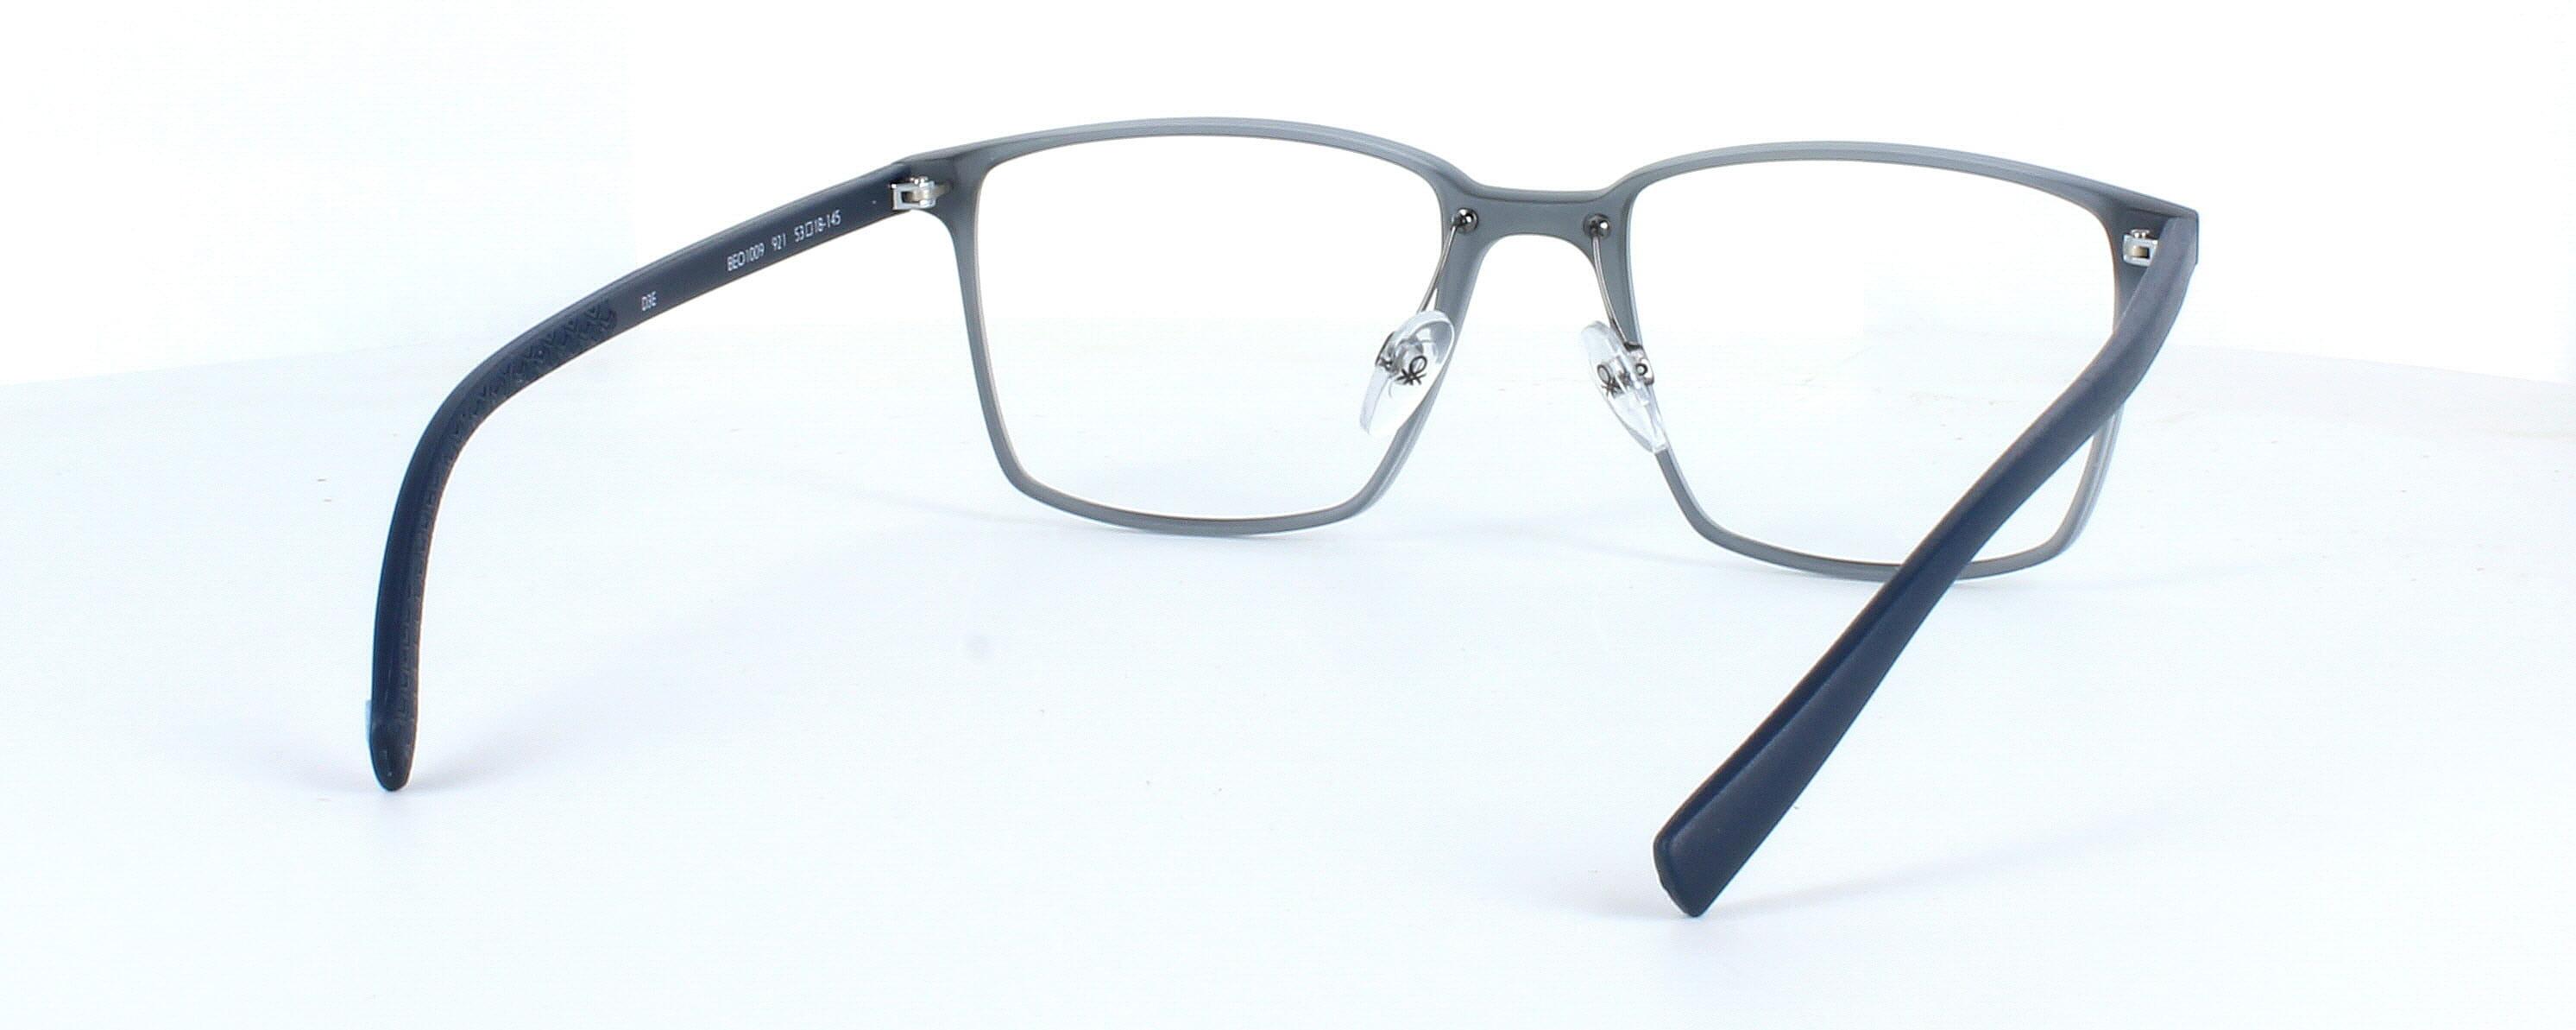 Benetton BEO1009 921 - Gent's matt crystal grey rectangular shaped glasses frame - image view 5